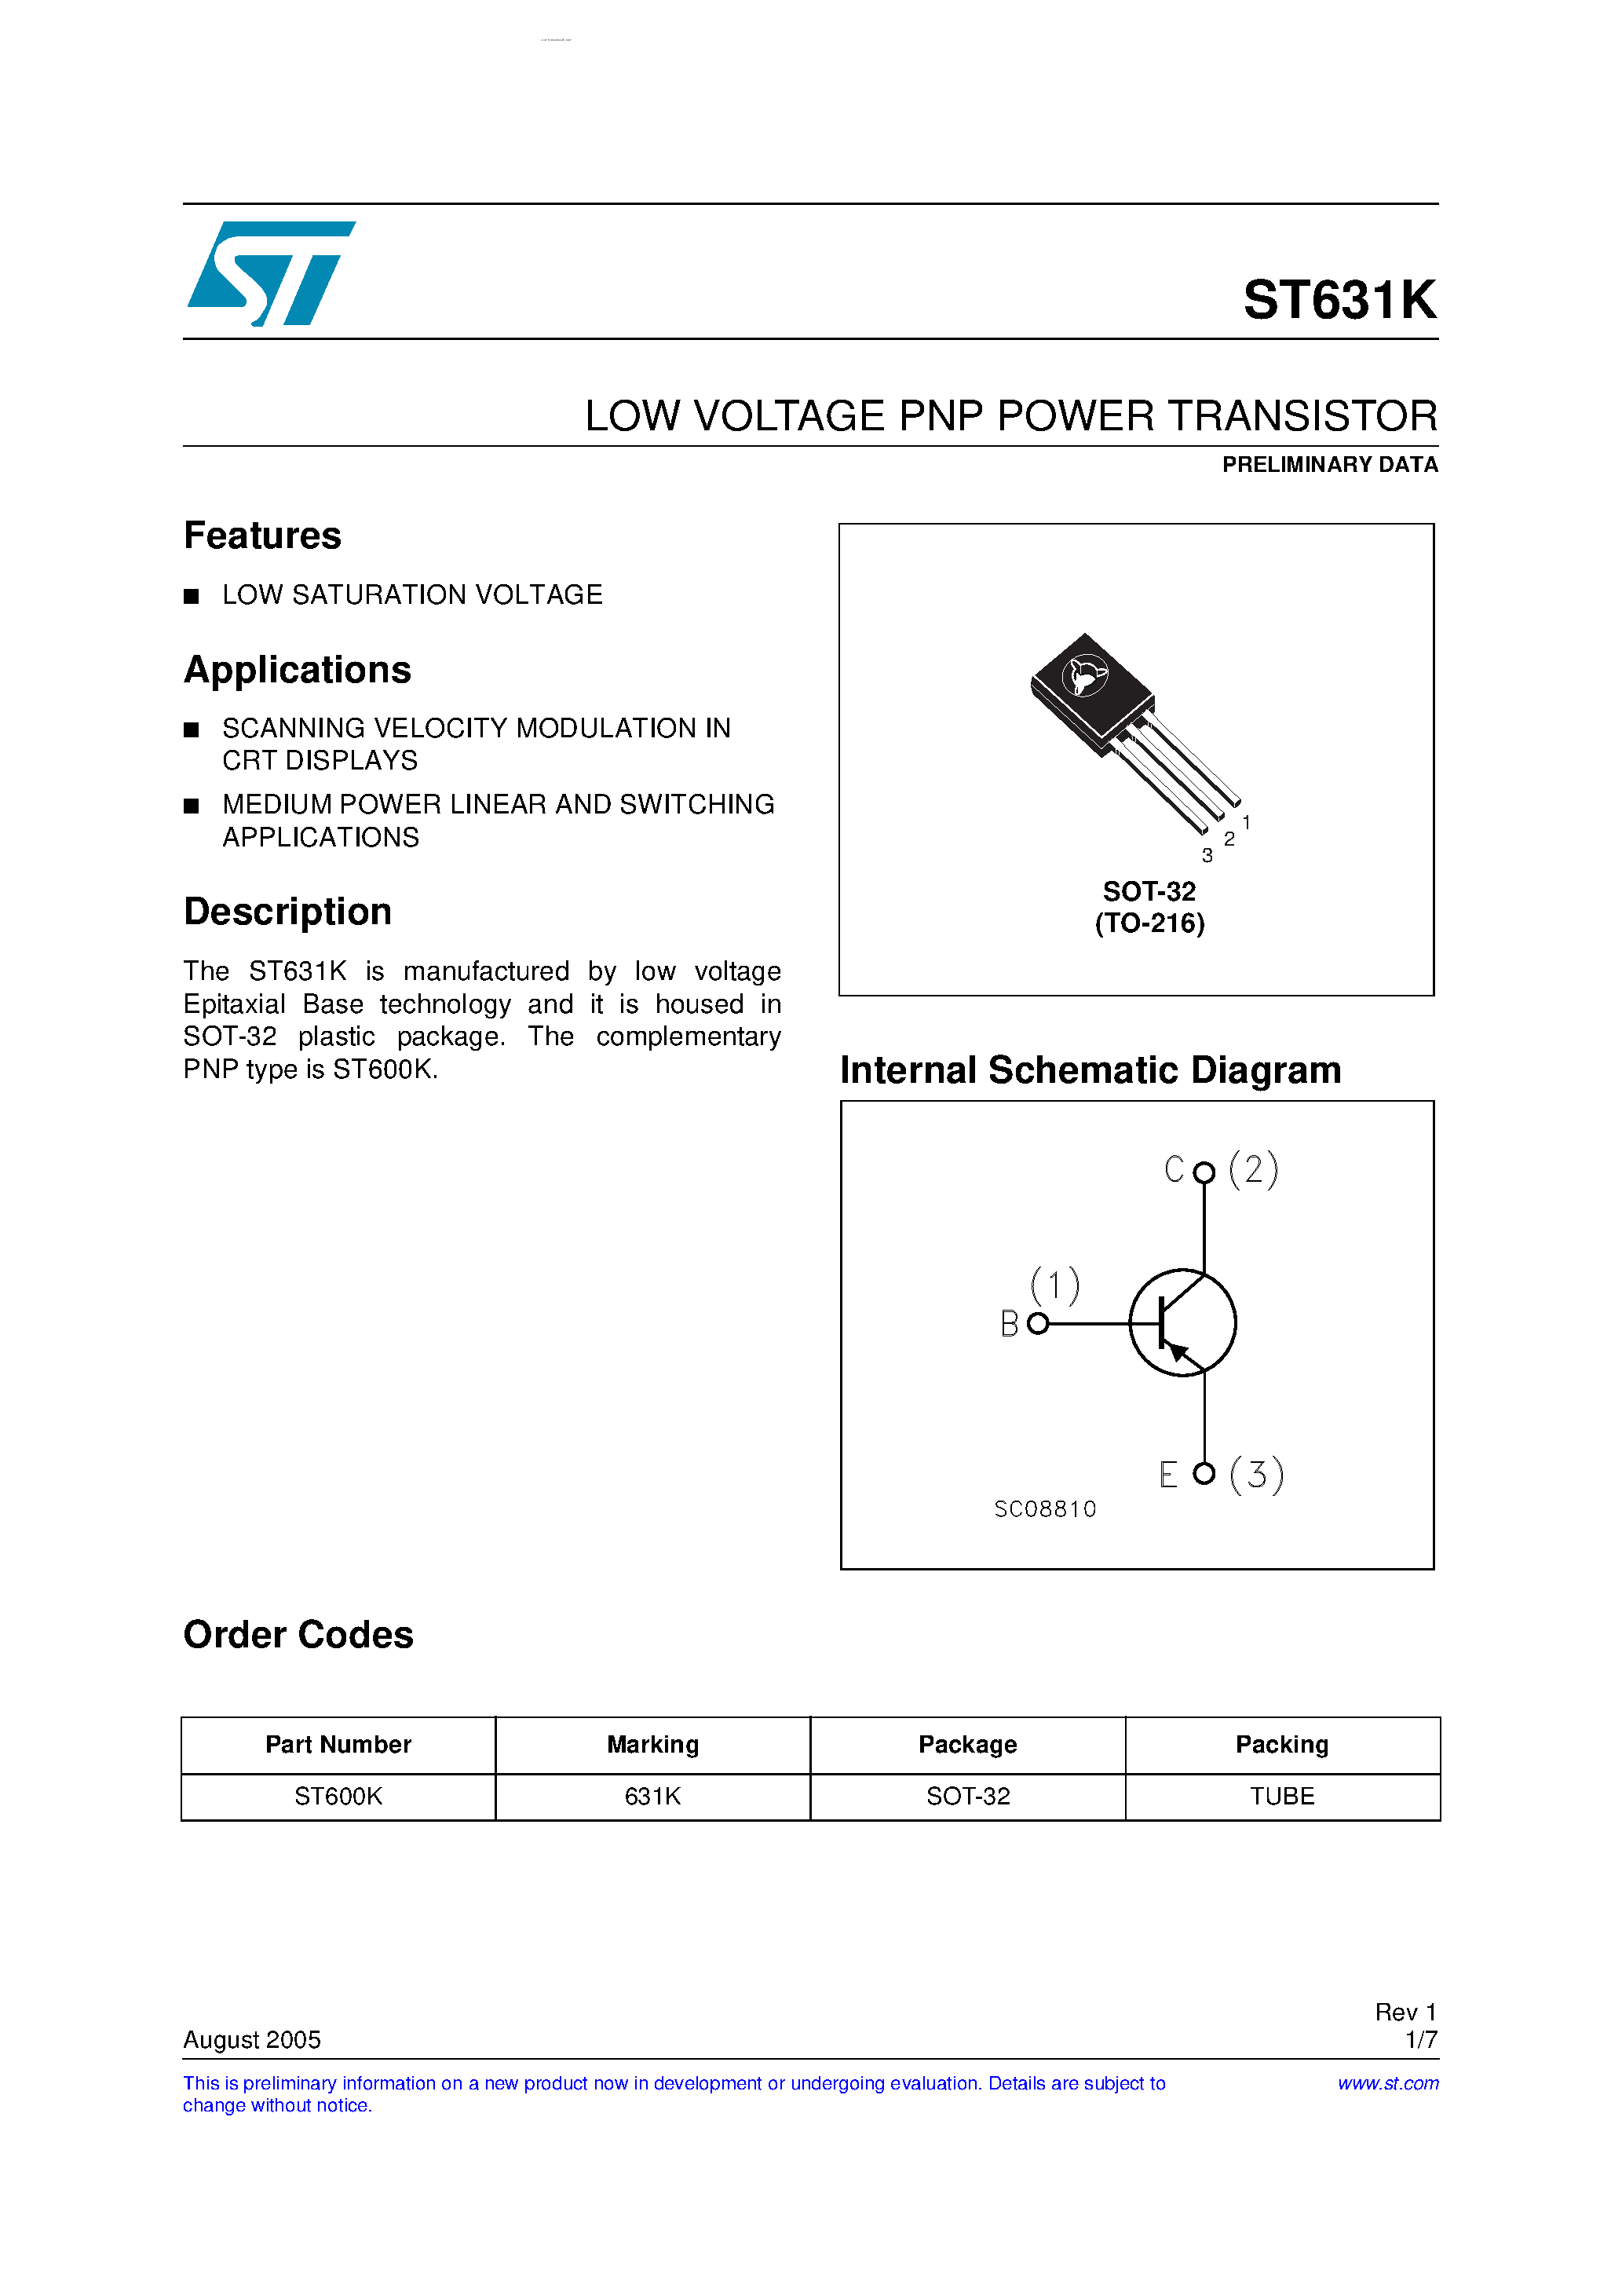 Datasheet ST631K - LOW VOLTAGE PNP POWER TRANSISTOR page 1